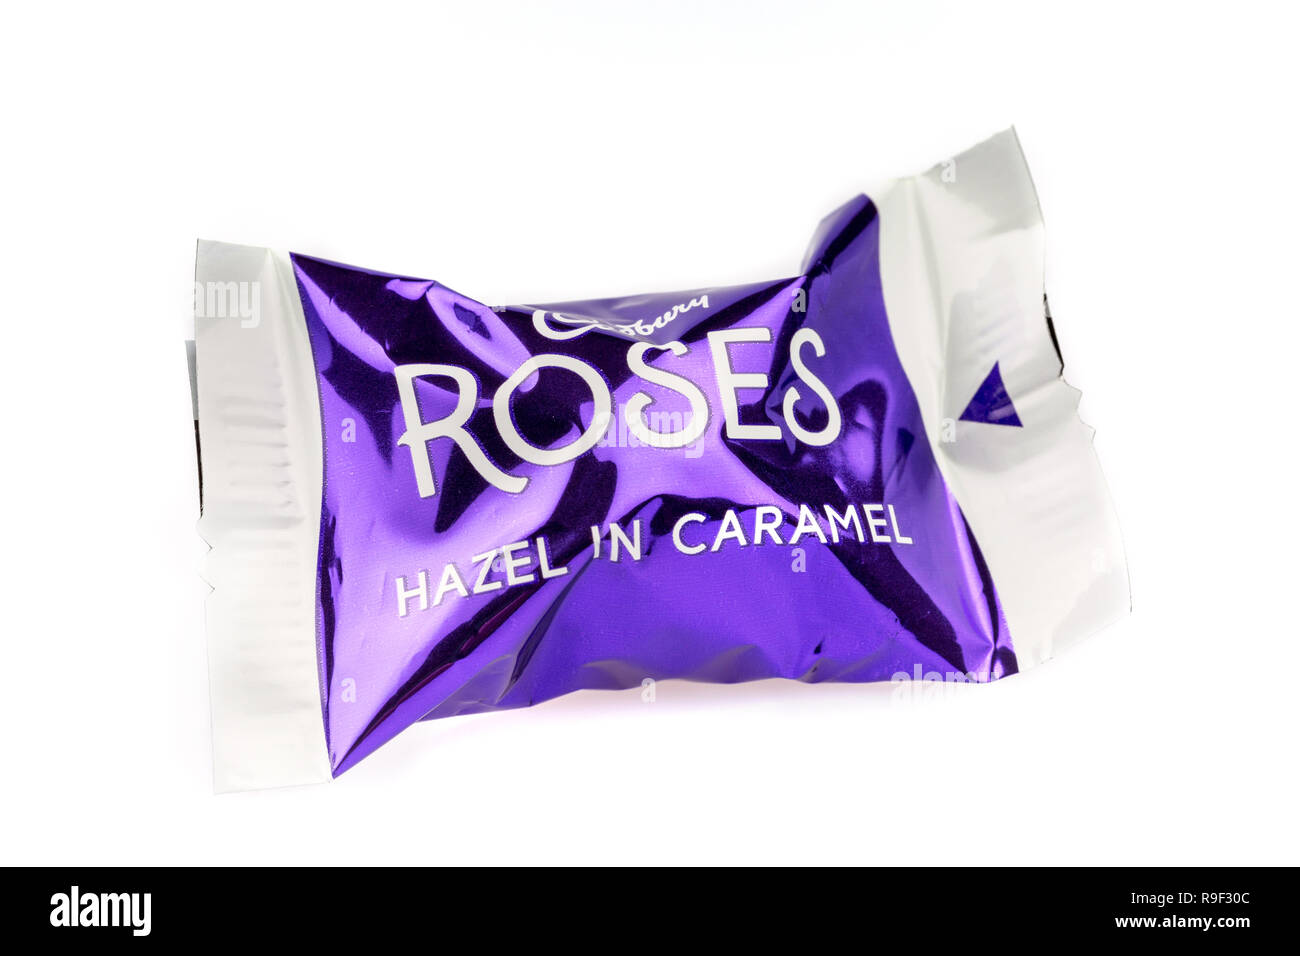 Hazel en Caramel chocolat Cadbury's roses sur fond blanc Banque D'Images